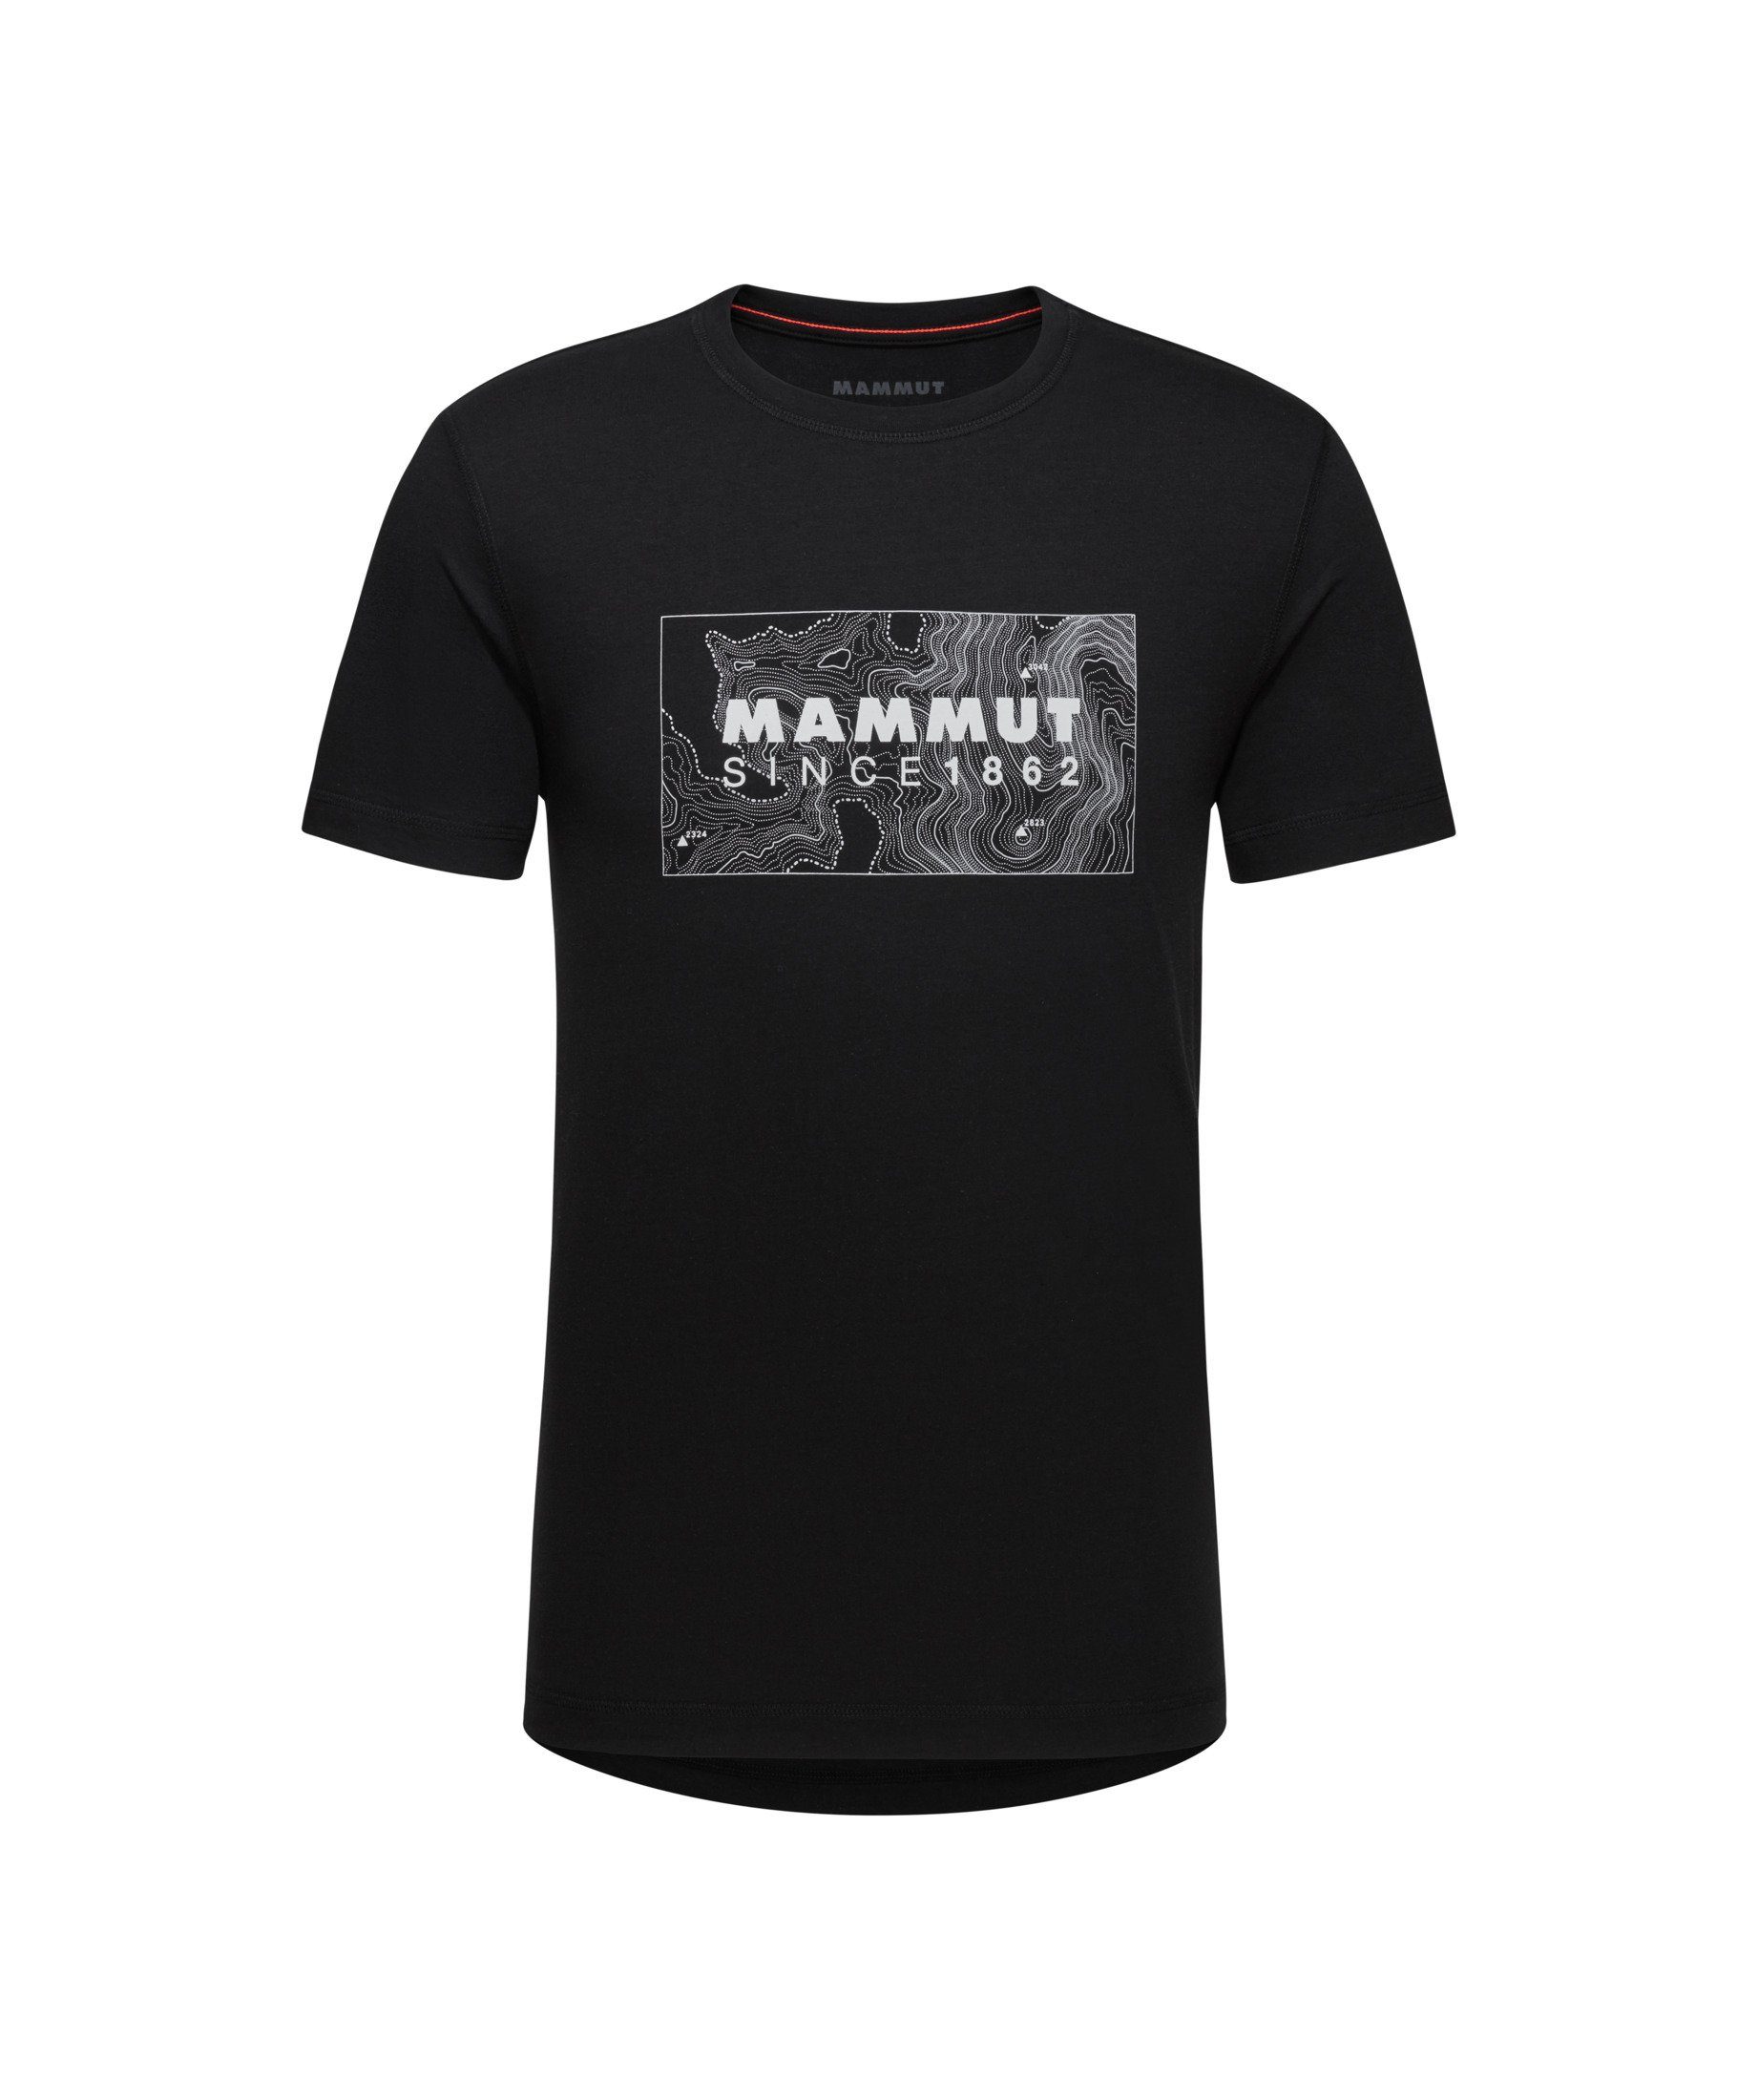 T-Shirt Men T-Shirt Core black Mammut Unexplored Mammut